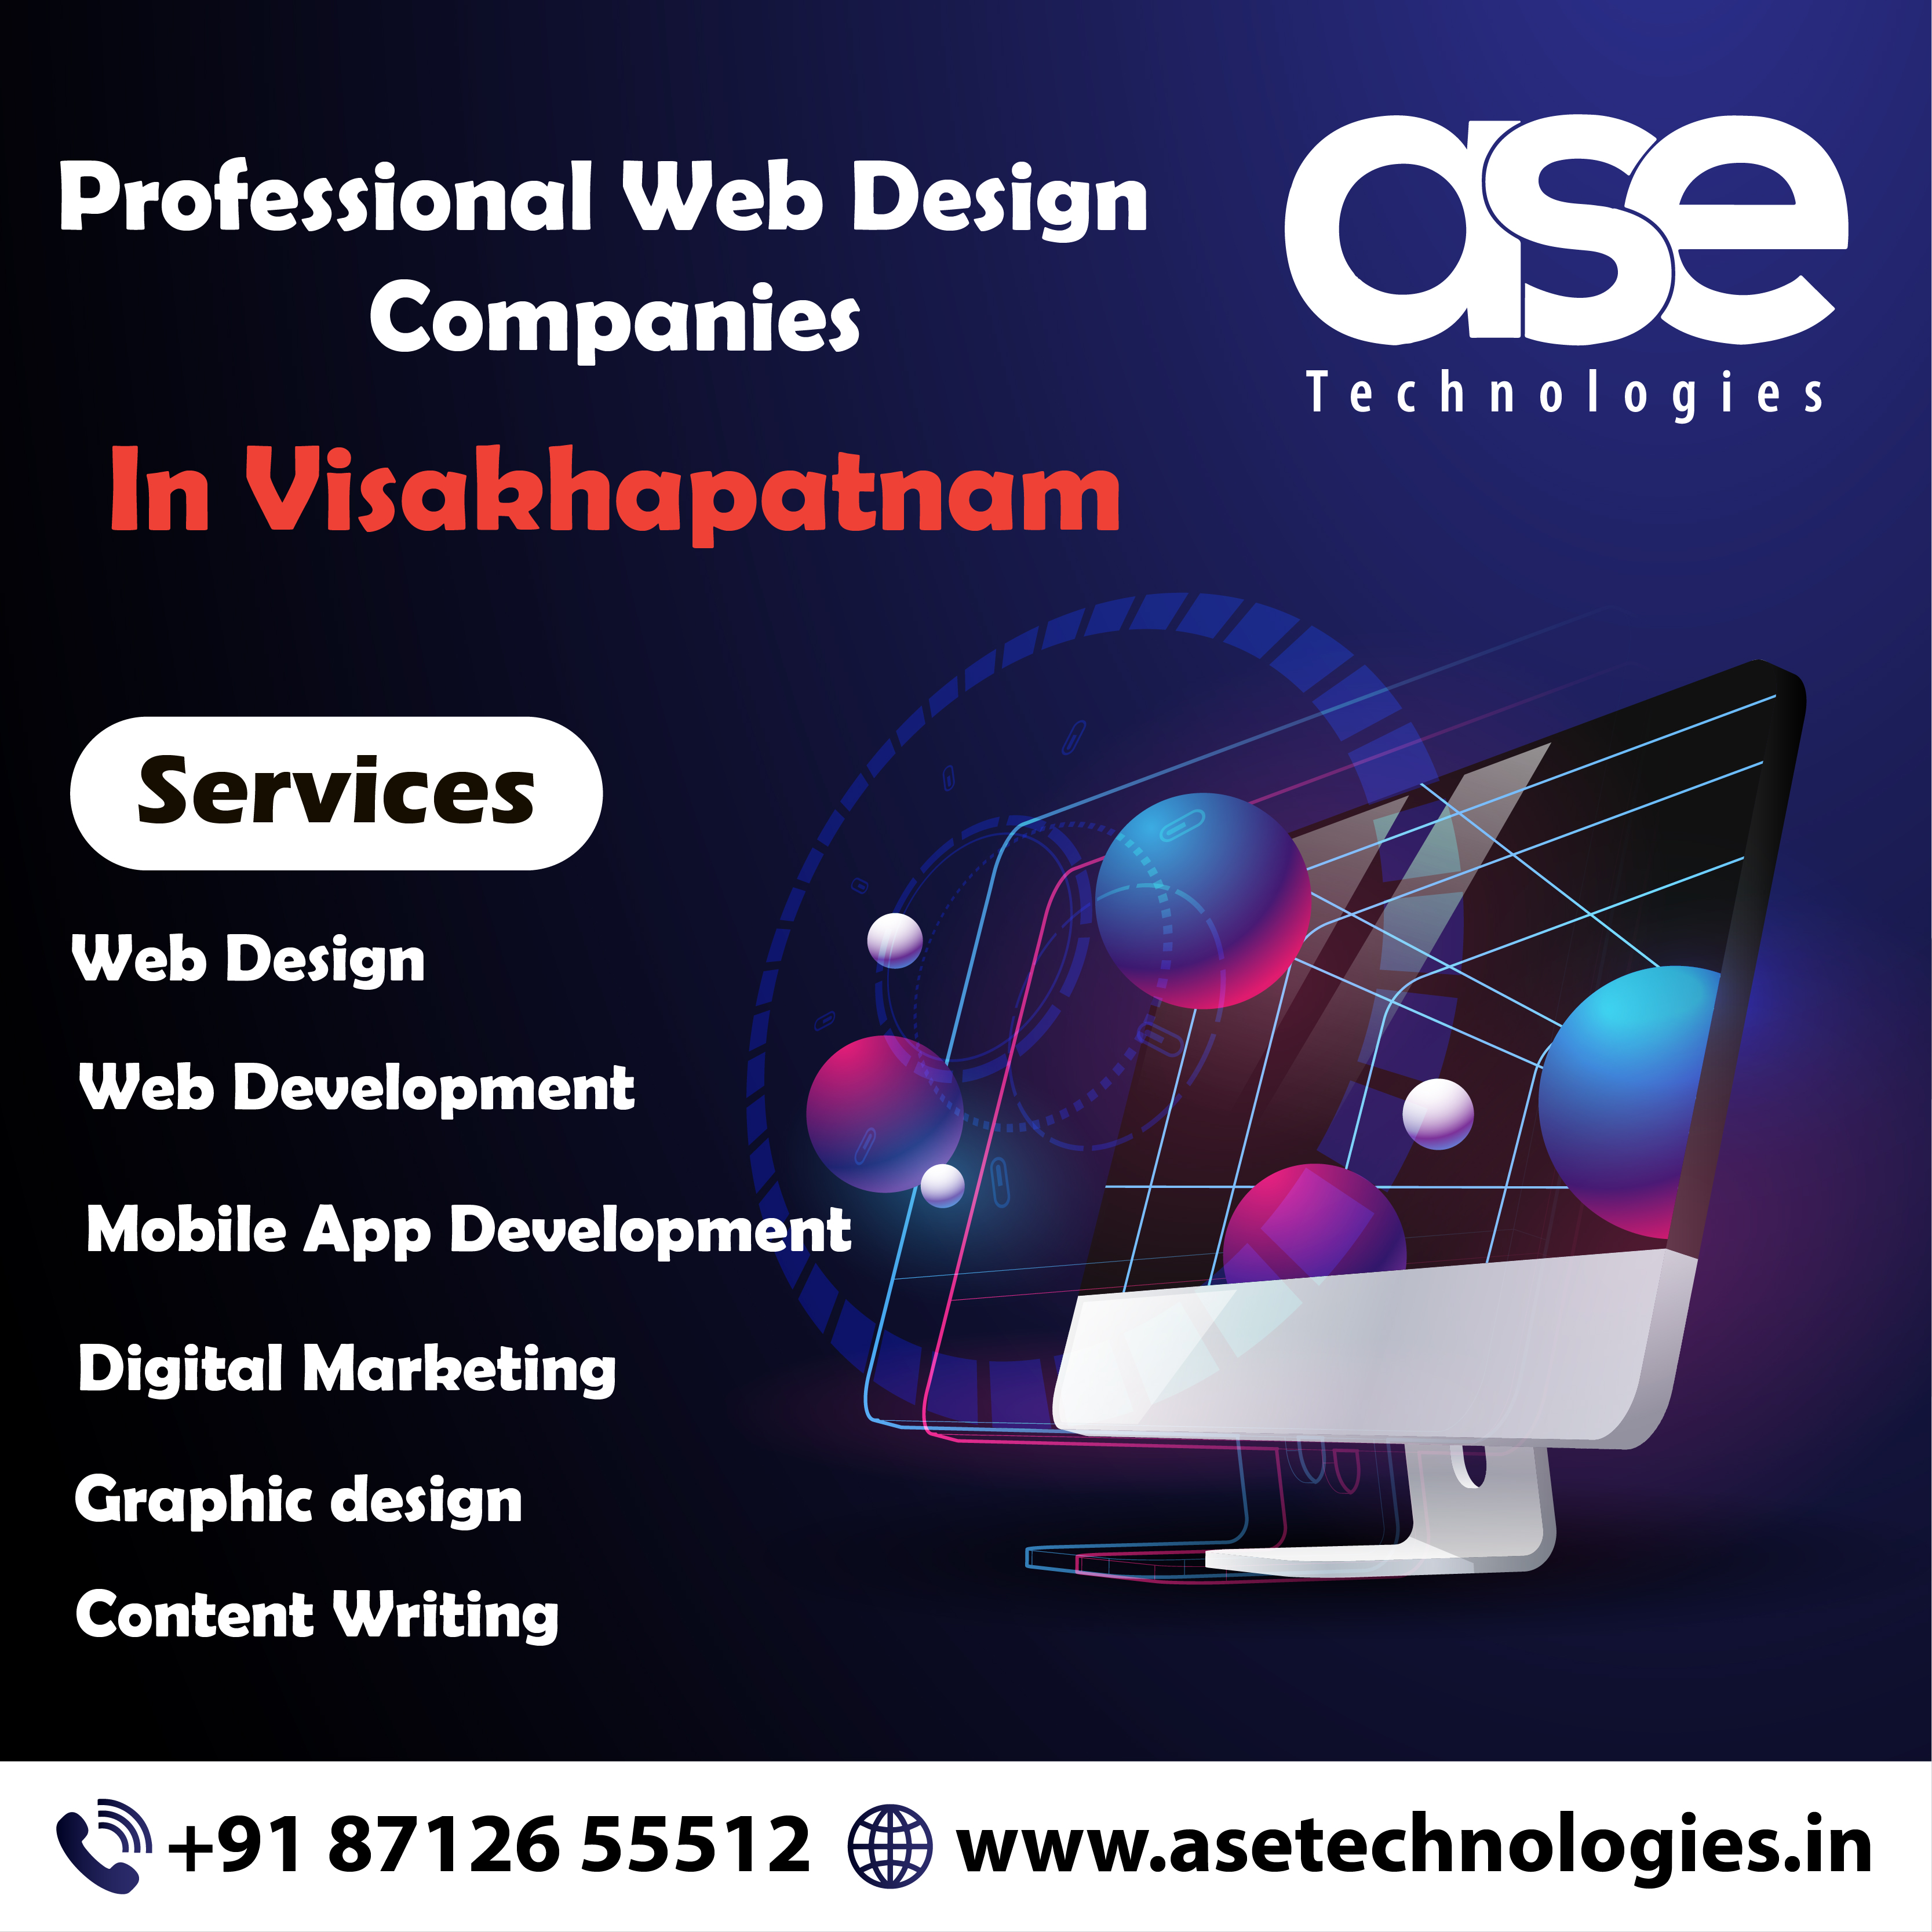 Professional Web Design Companies In Visakhapatnam